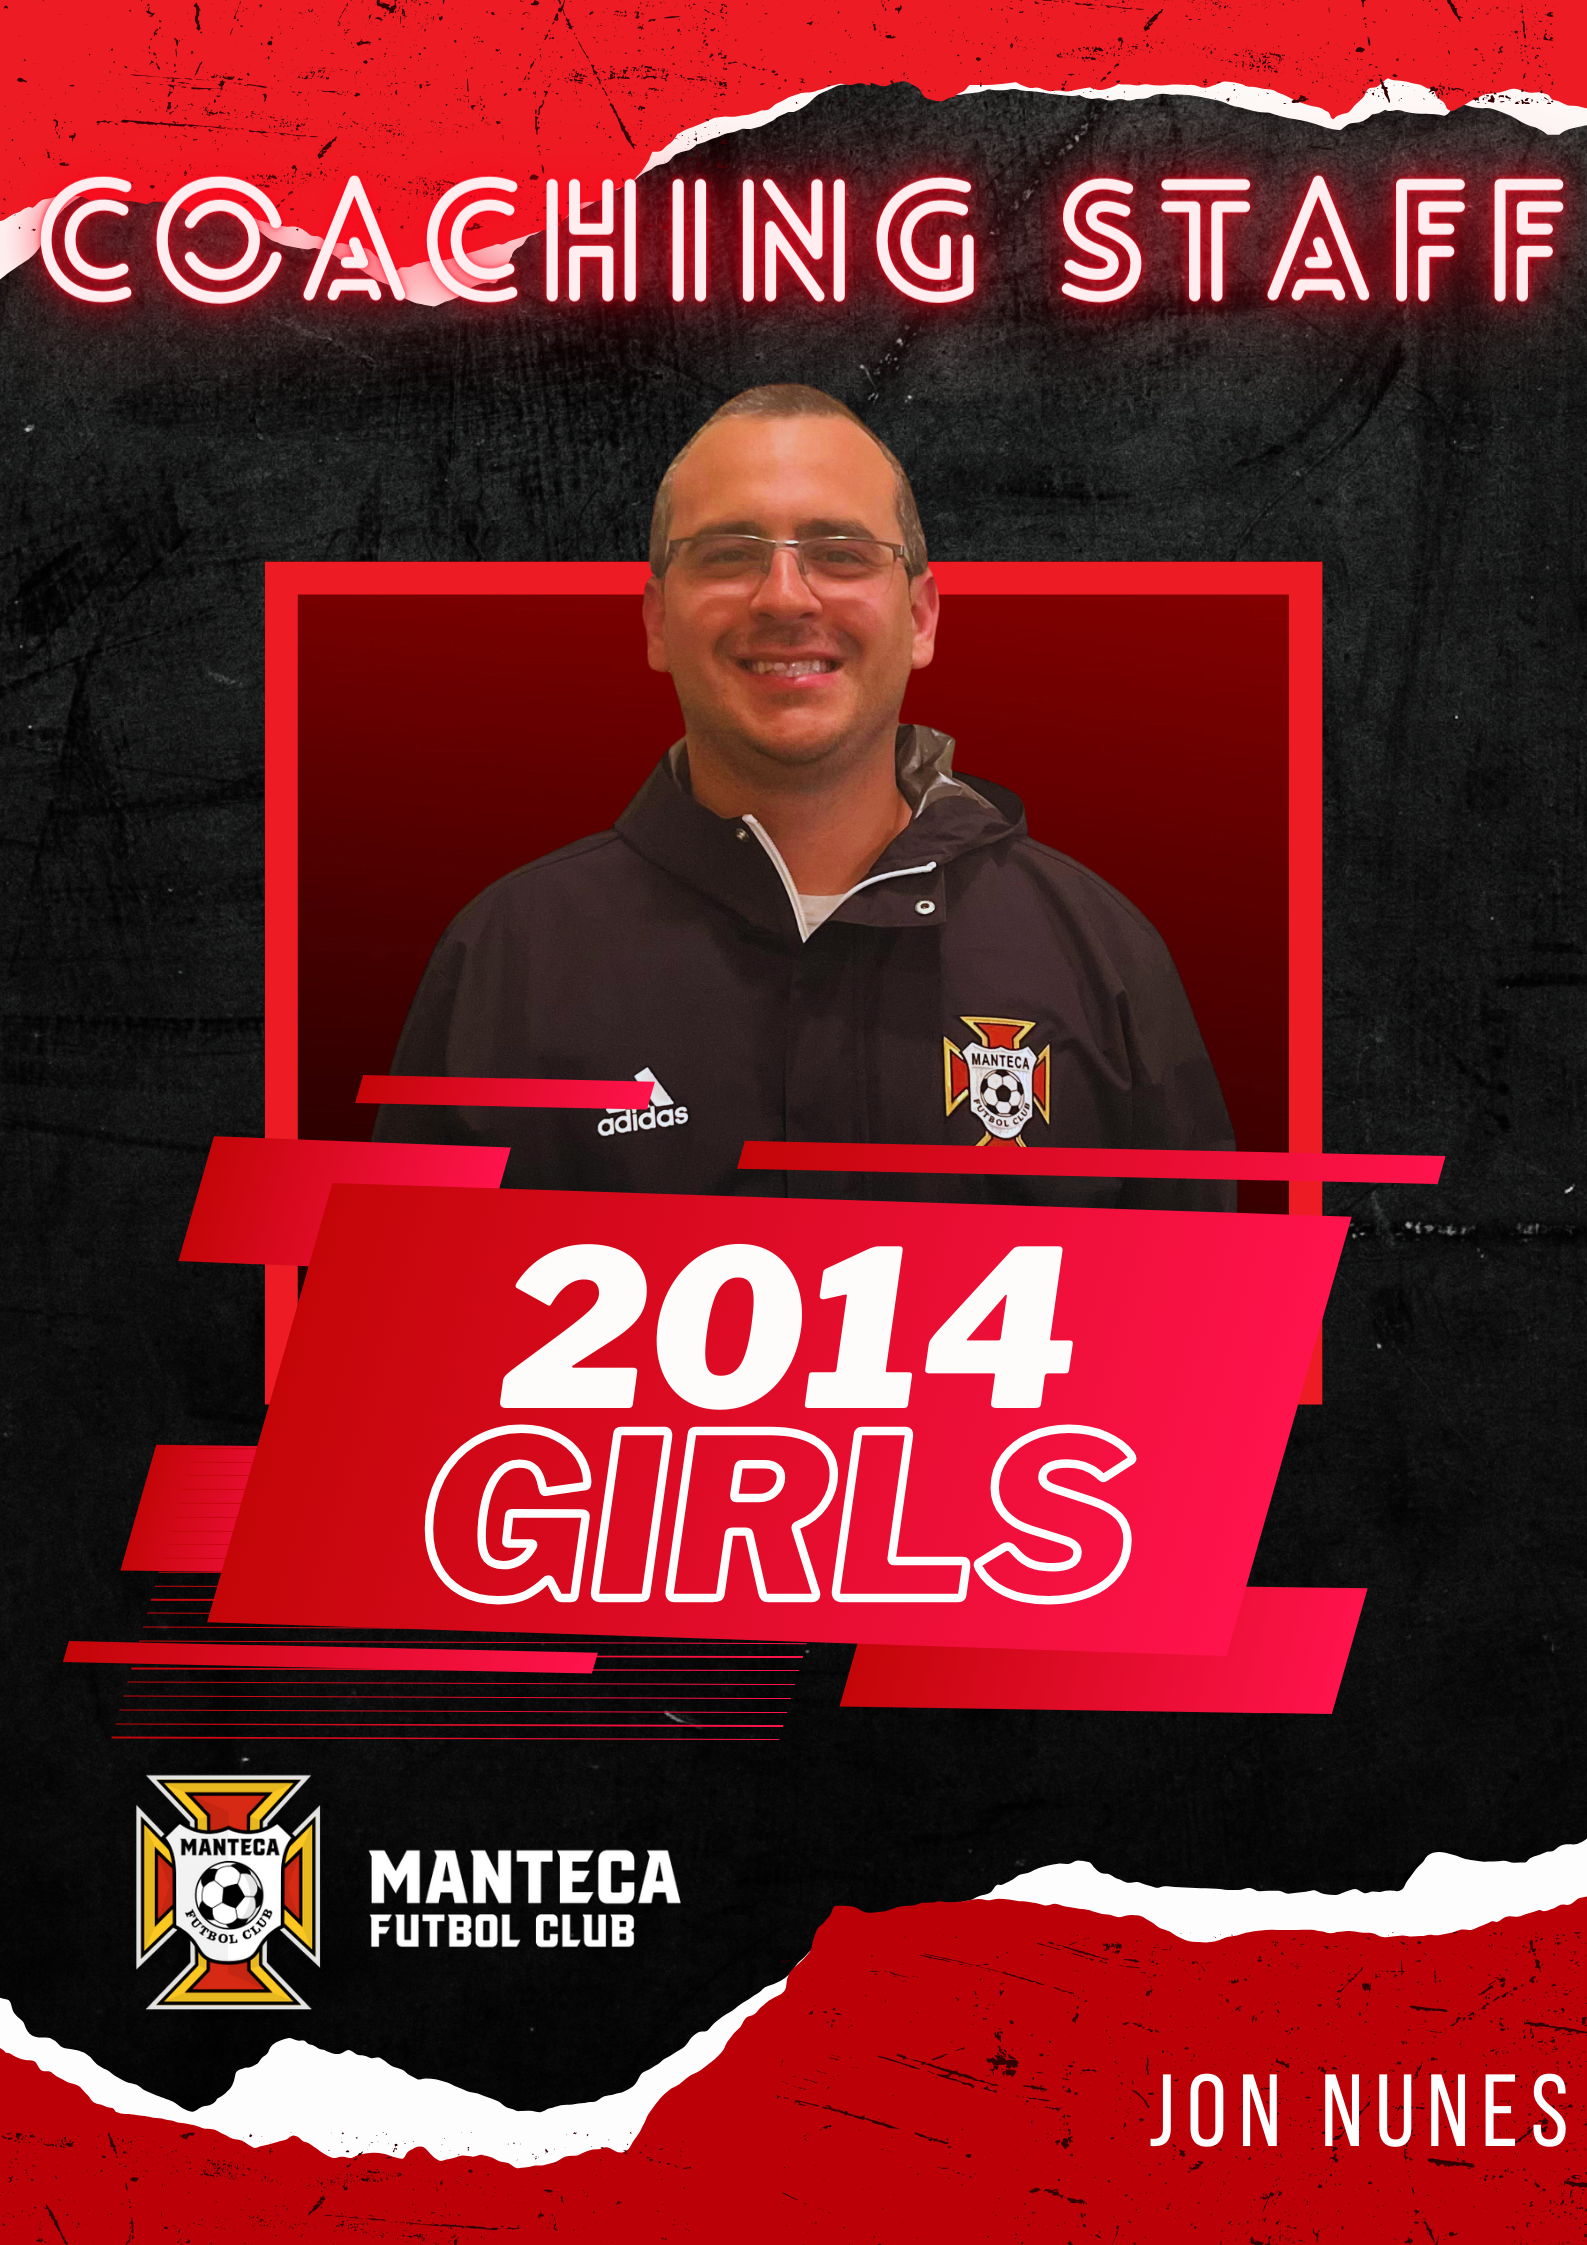 Manteca Futbol Club 2014 Girls White